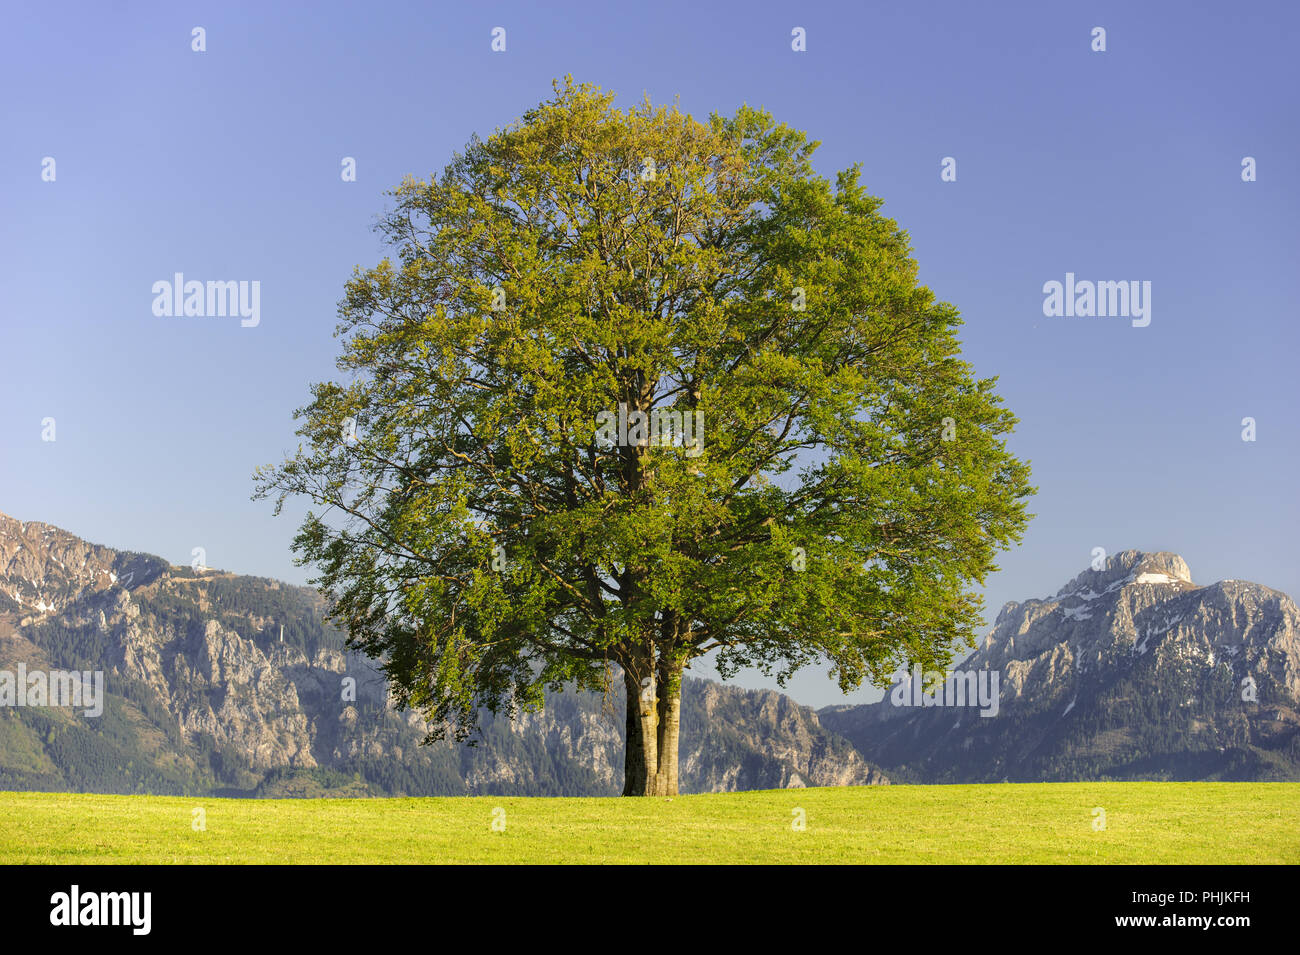 single big beech tree in field with perfect treetop Stock Photo